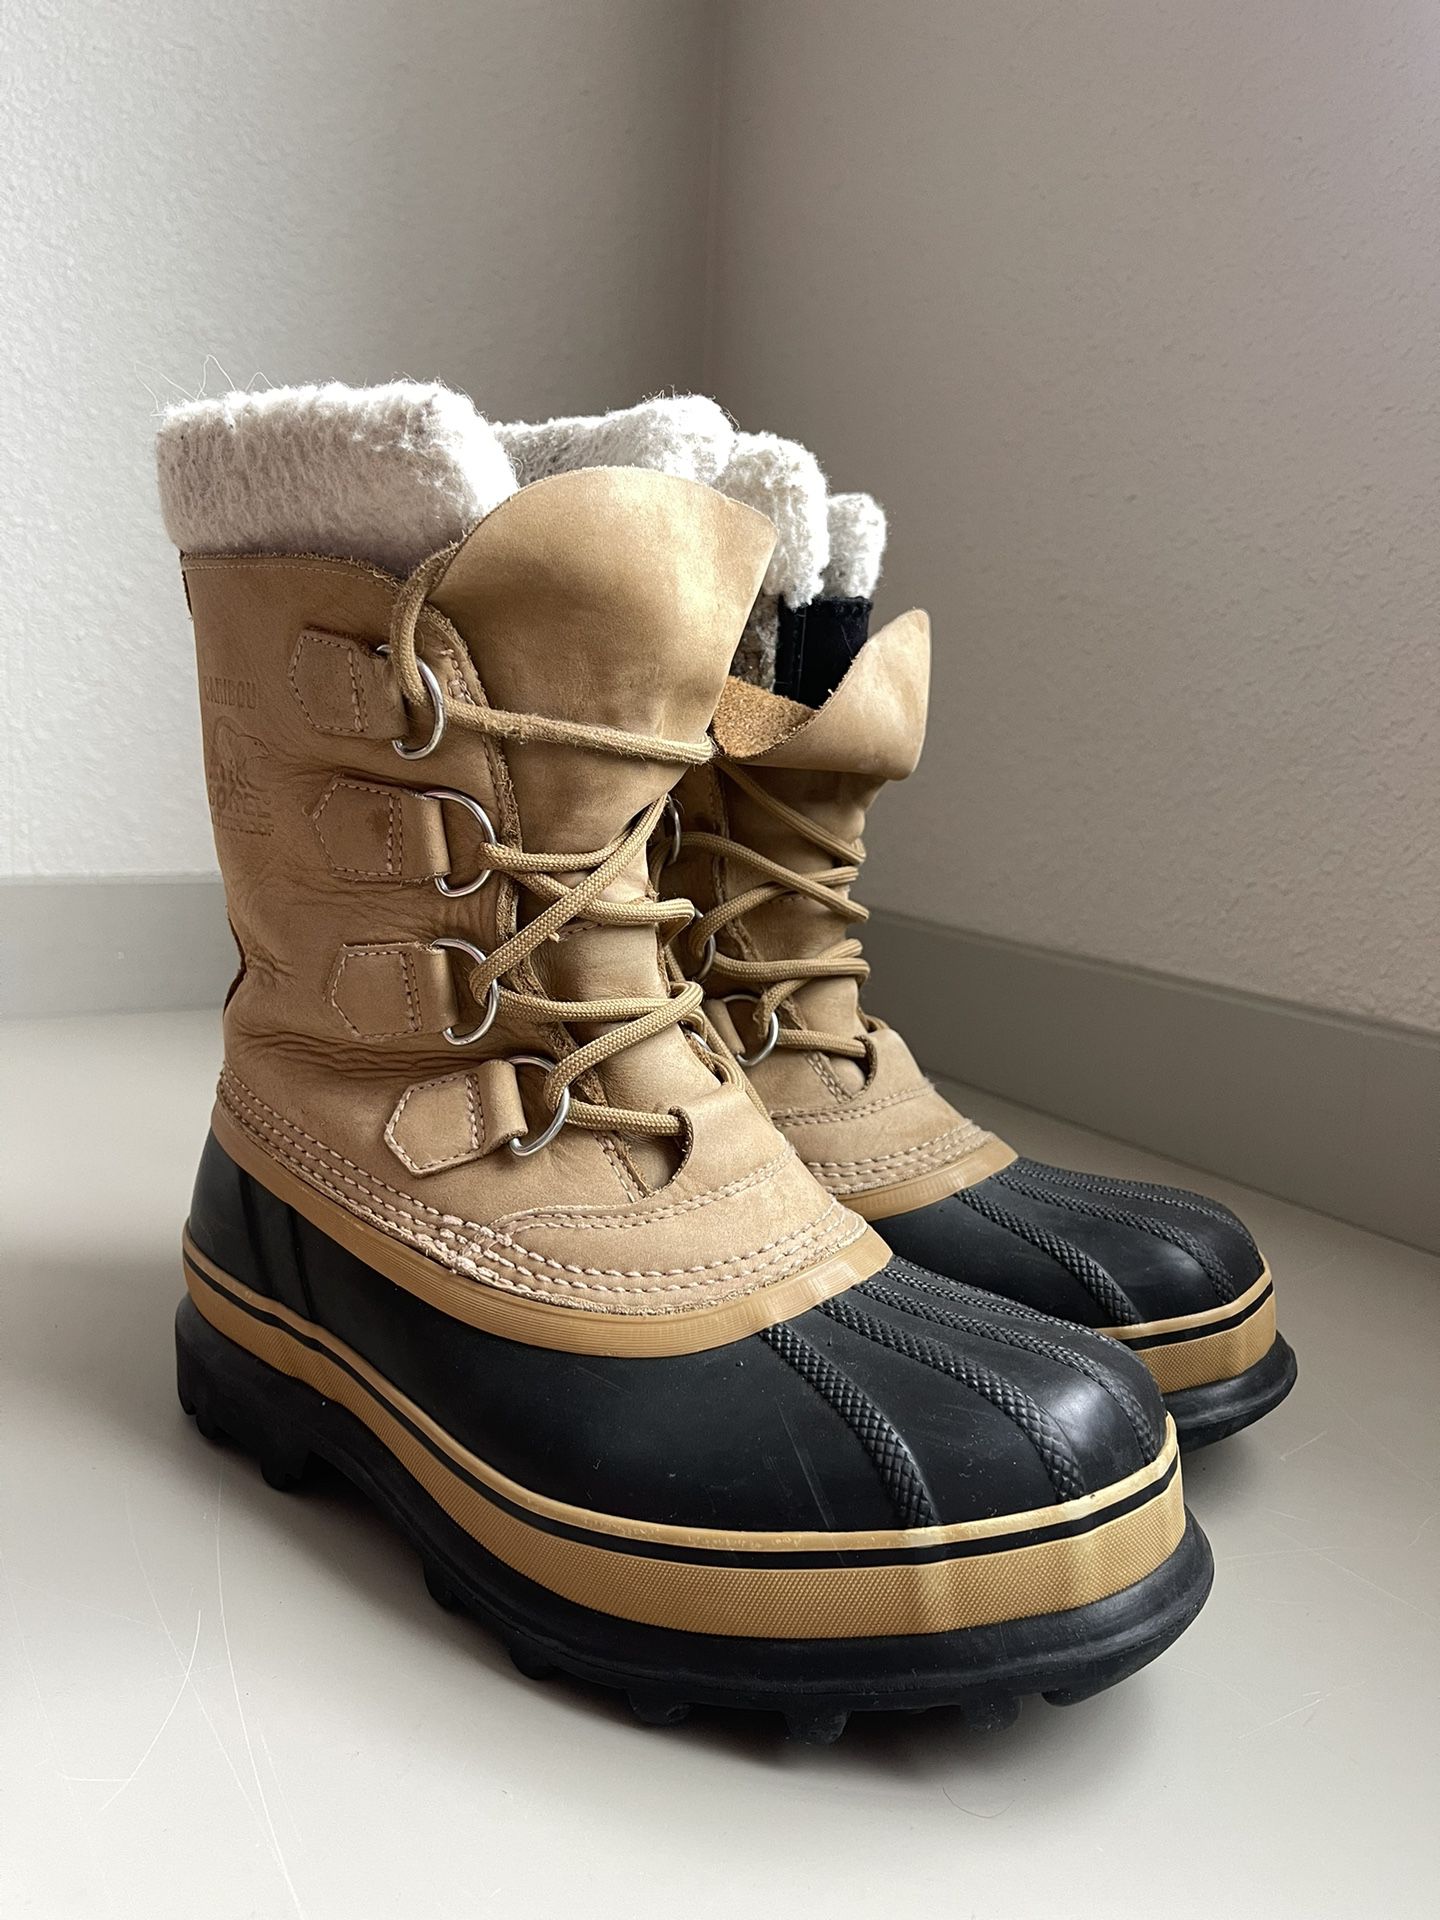 Sorel Boots Caribou Woman’s (Size 8)